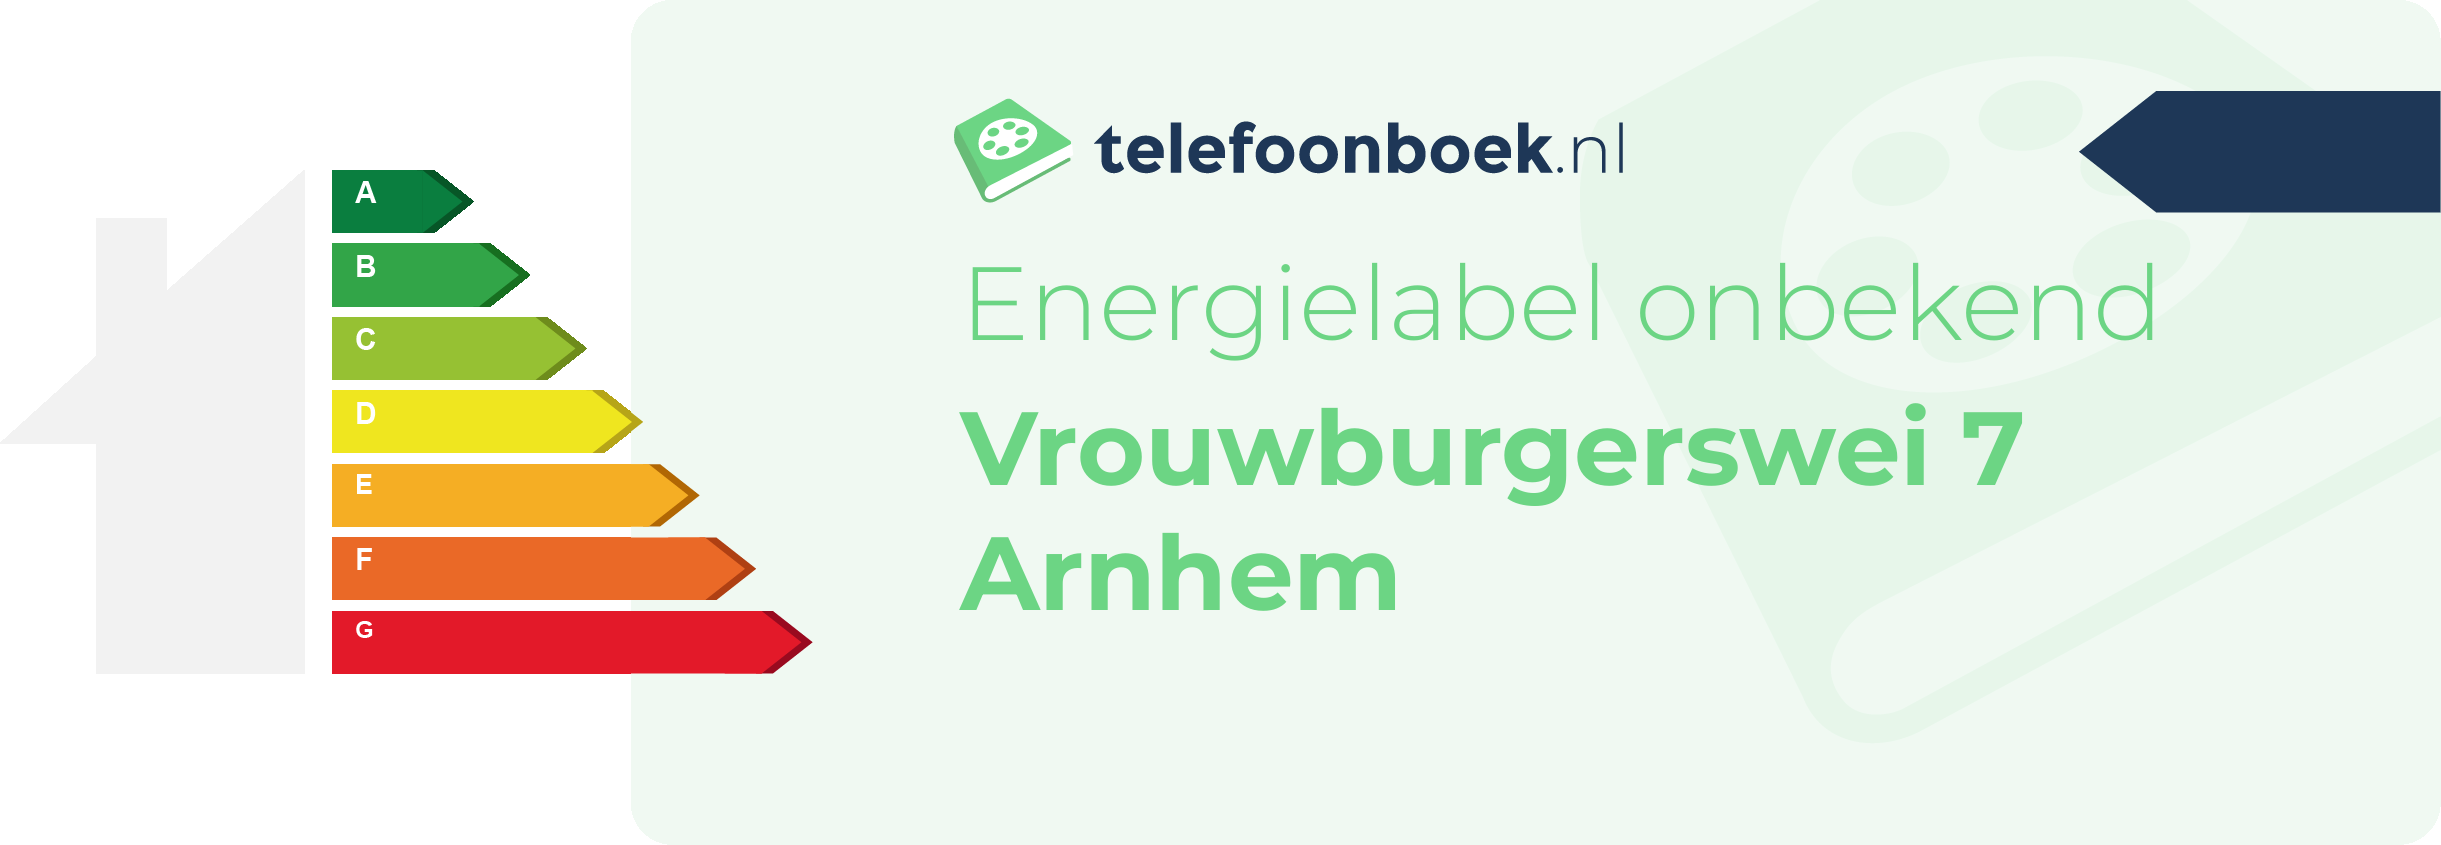 Energielabel Vrouwburgerswei 7 Arnhem